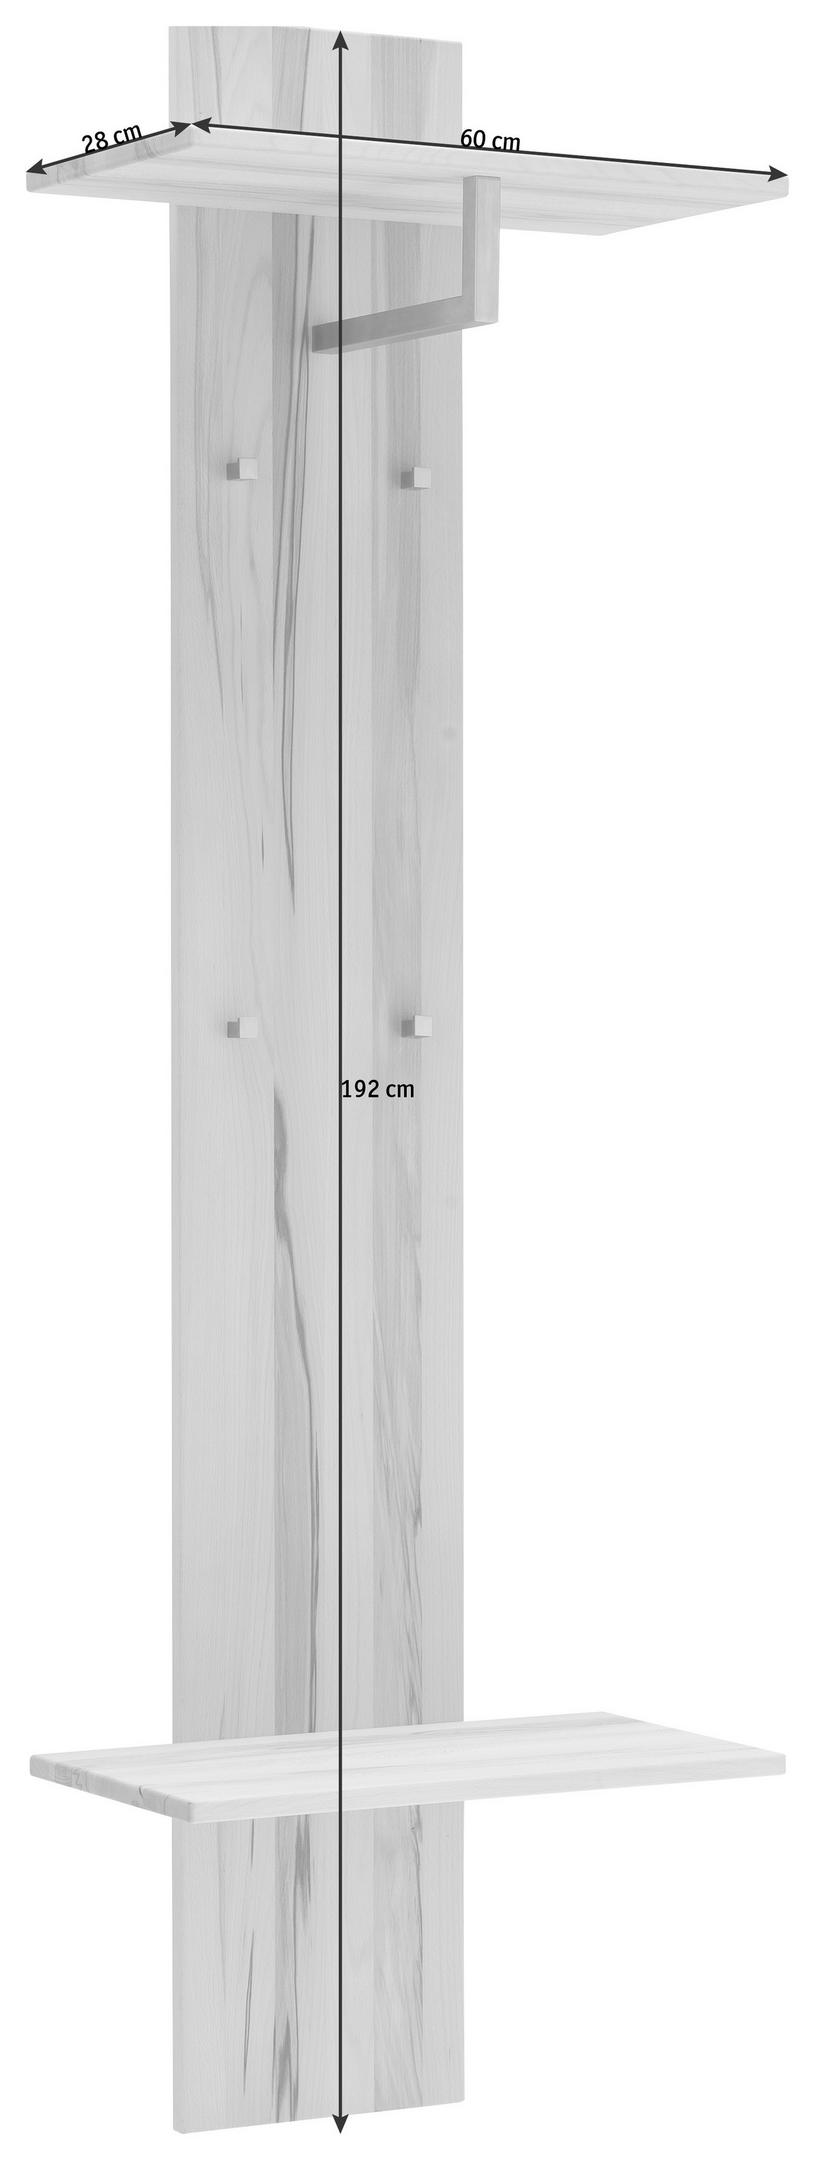 GARDEROBENPANEEL 60/192/28 cm  - Eichefarben, MODERN, Holz (60/192/28cm) - Linea Natura